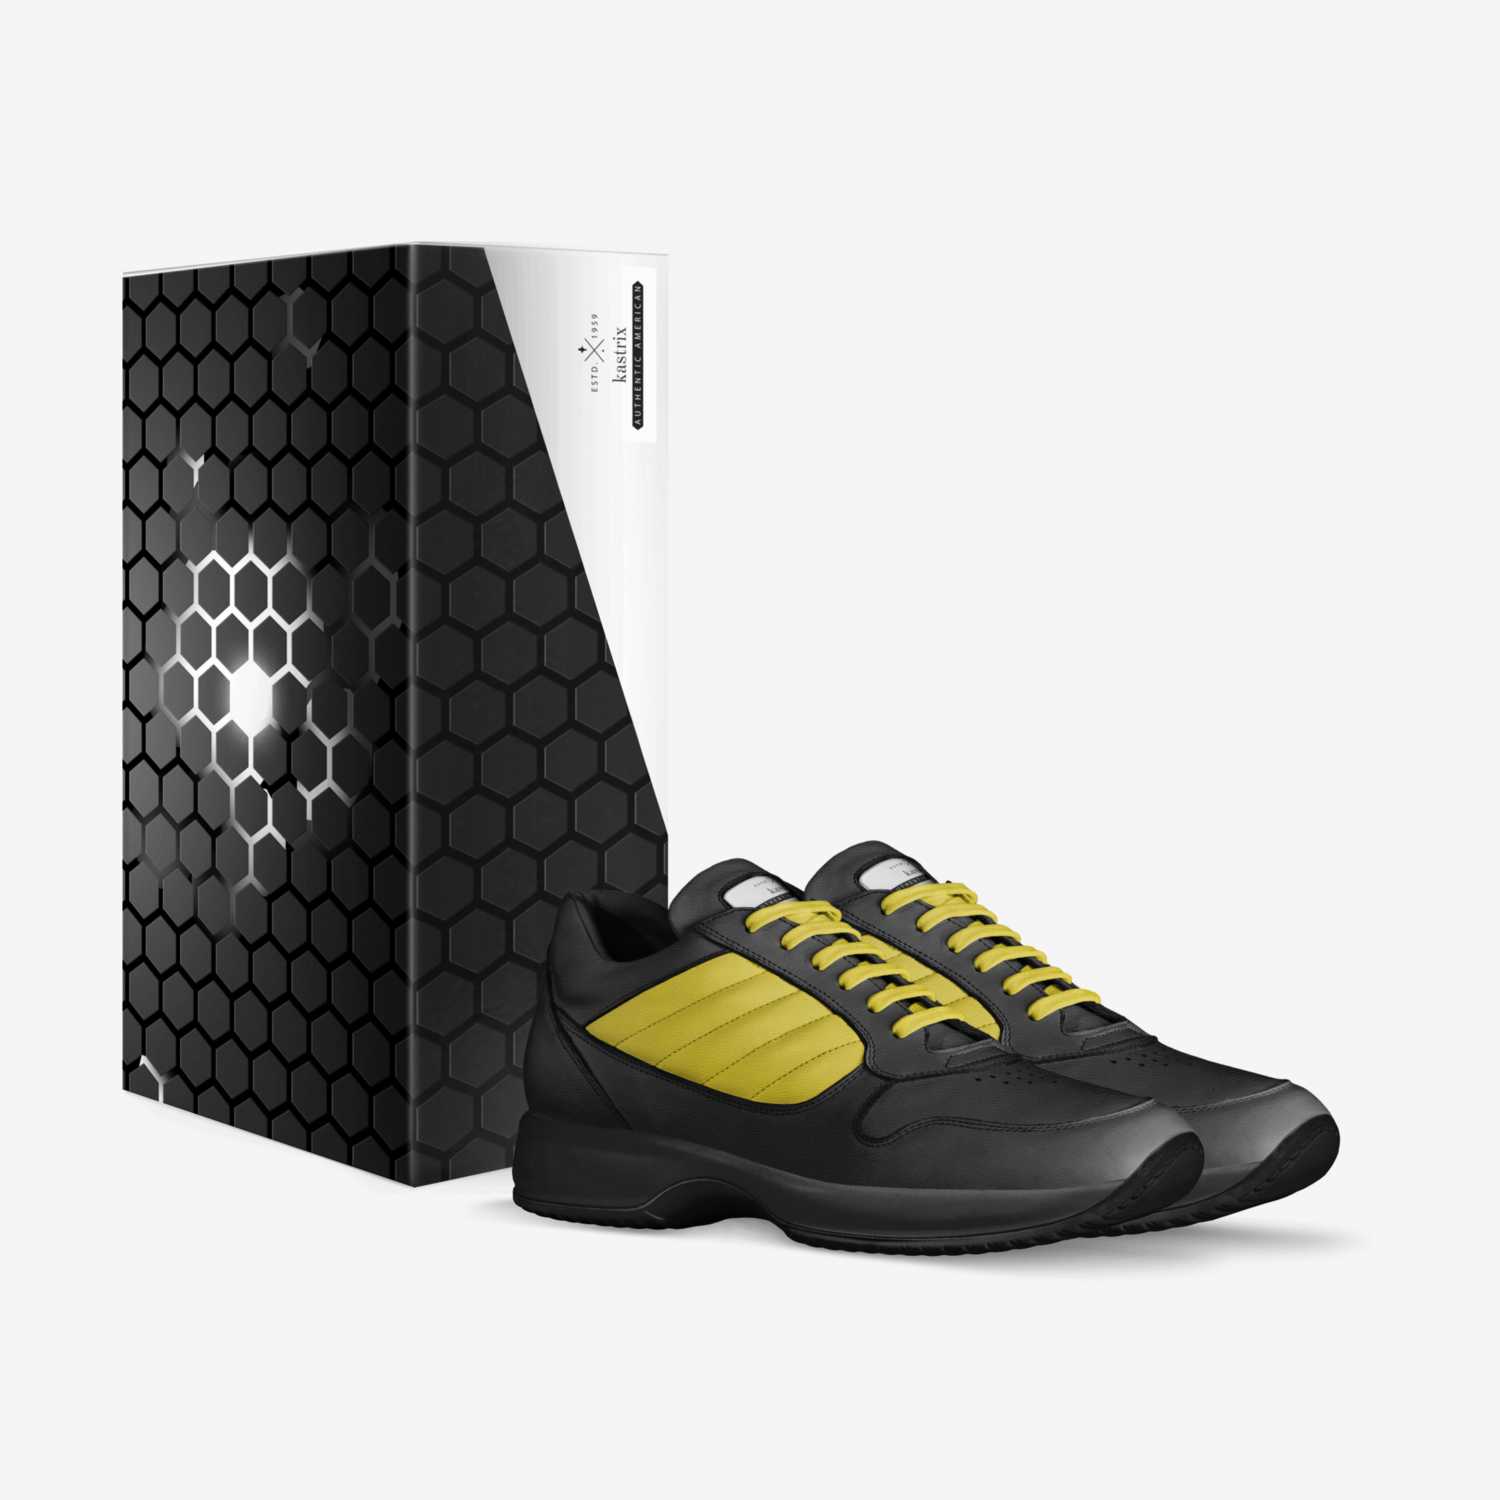 kastrix custom made in Italy shoes by Oren Krurmei | Box view